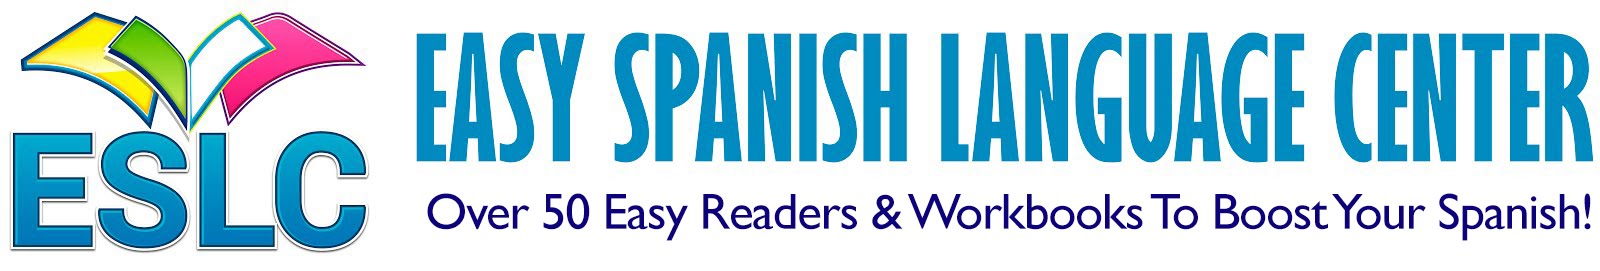 Easy Spanish Language Center